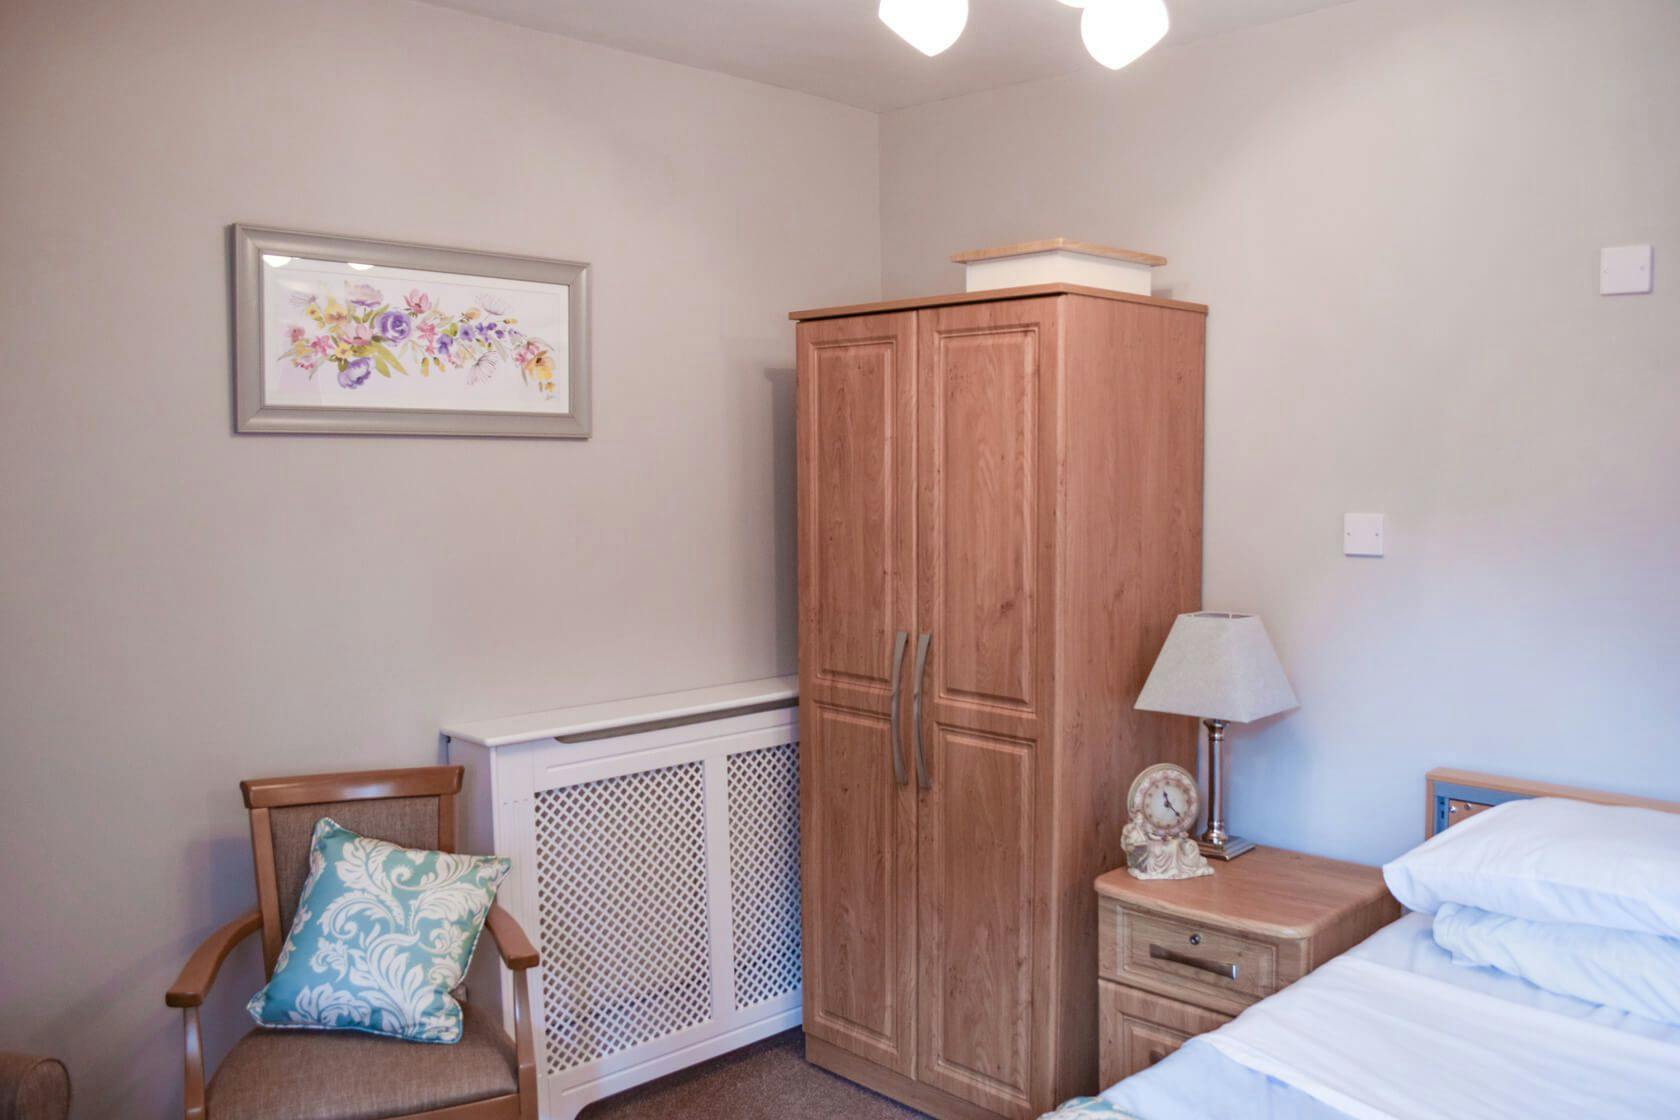 Bedroom of Park House care home in Bewdley, West Midlands